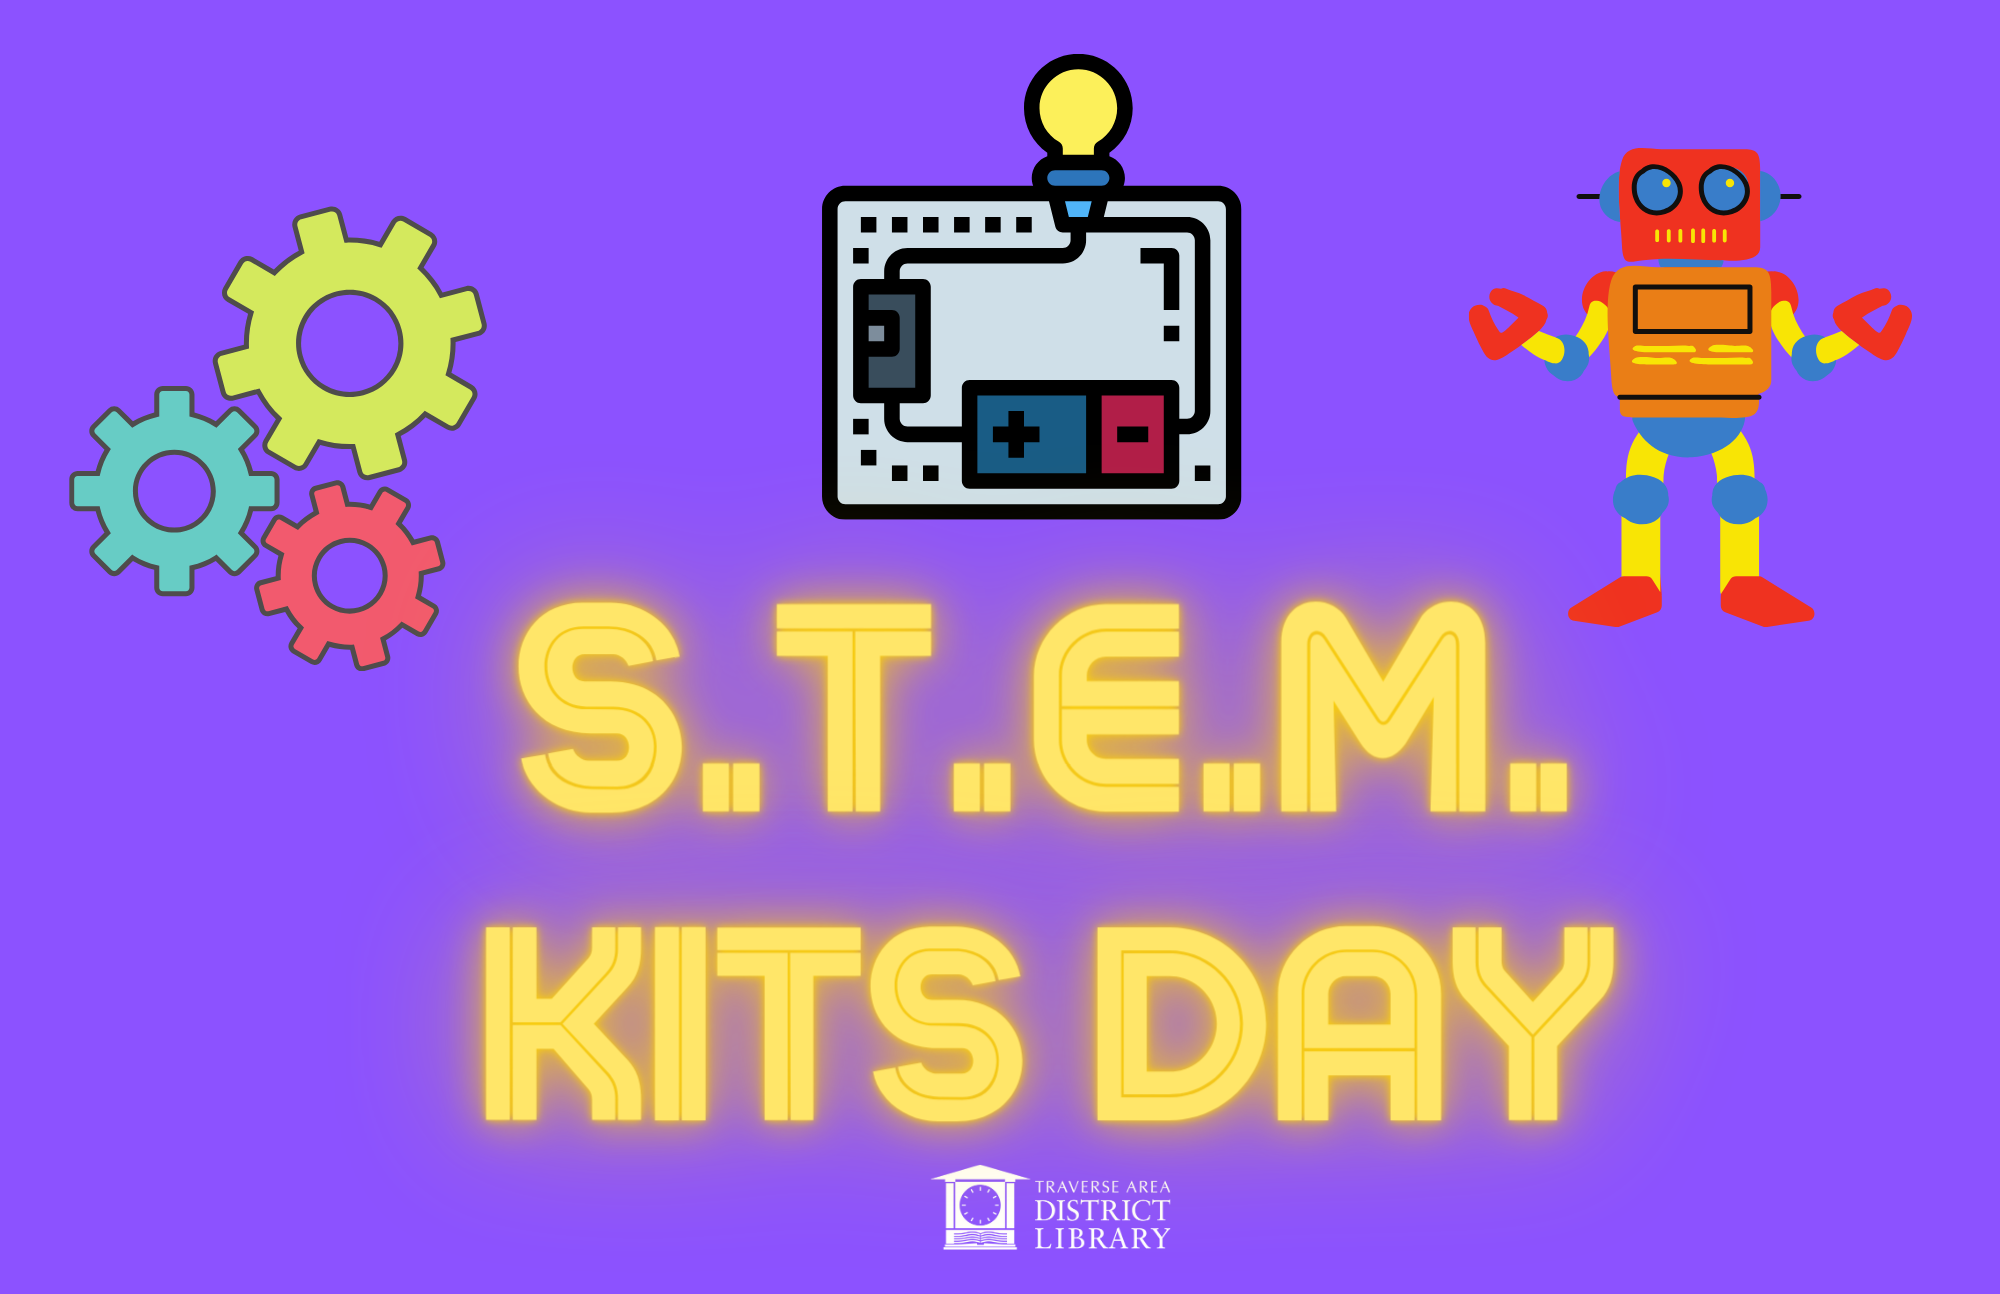 STEM Kits Day